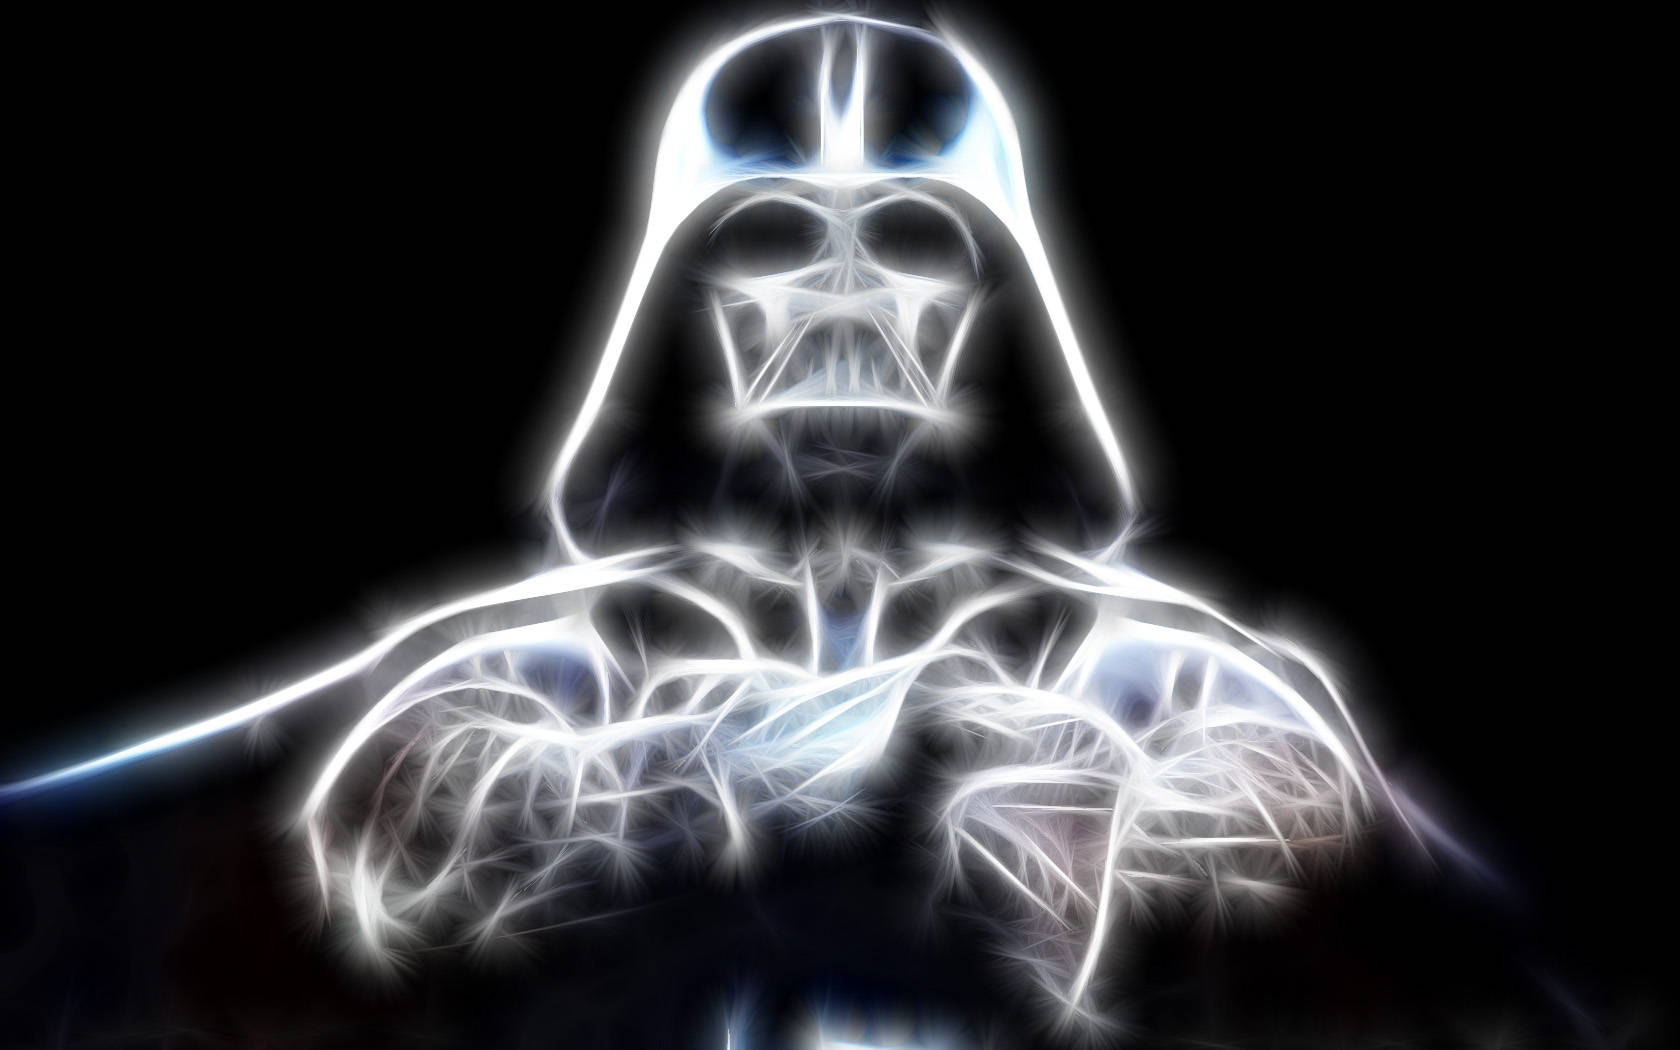 Glowing Darth Vader Star Wars Landscape Wallpaper